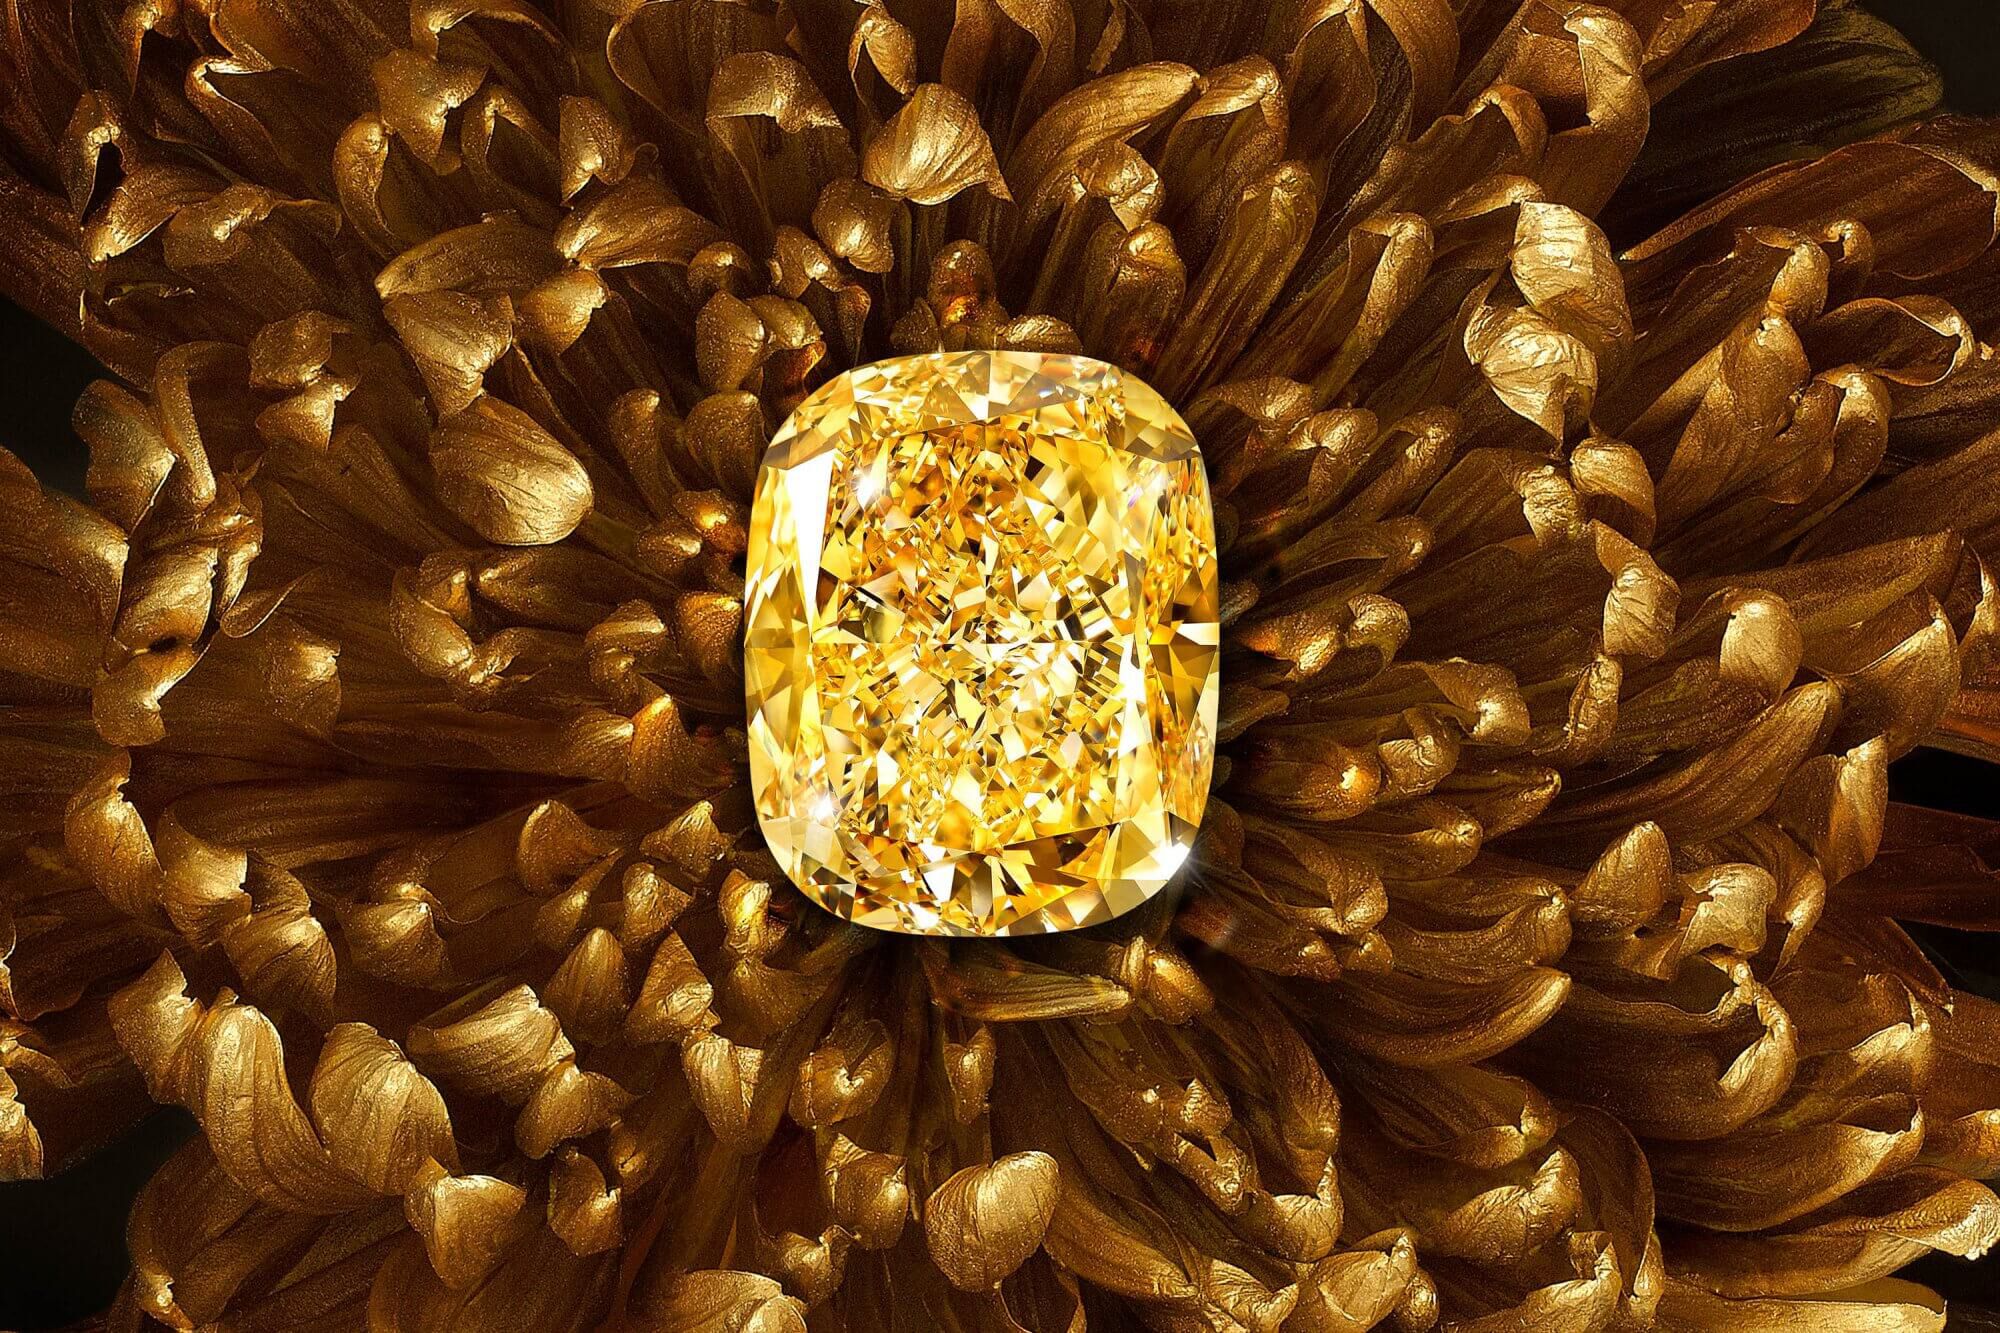 The famous Graff Golden Empress yellow diamond with a background of golden flower petals